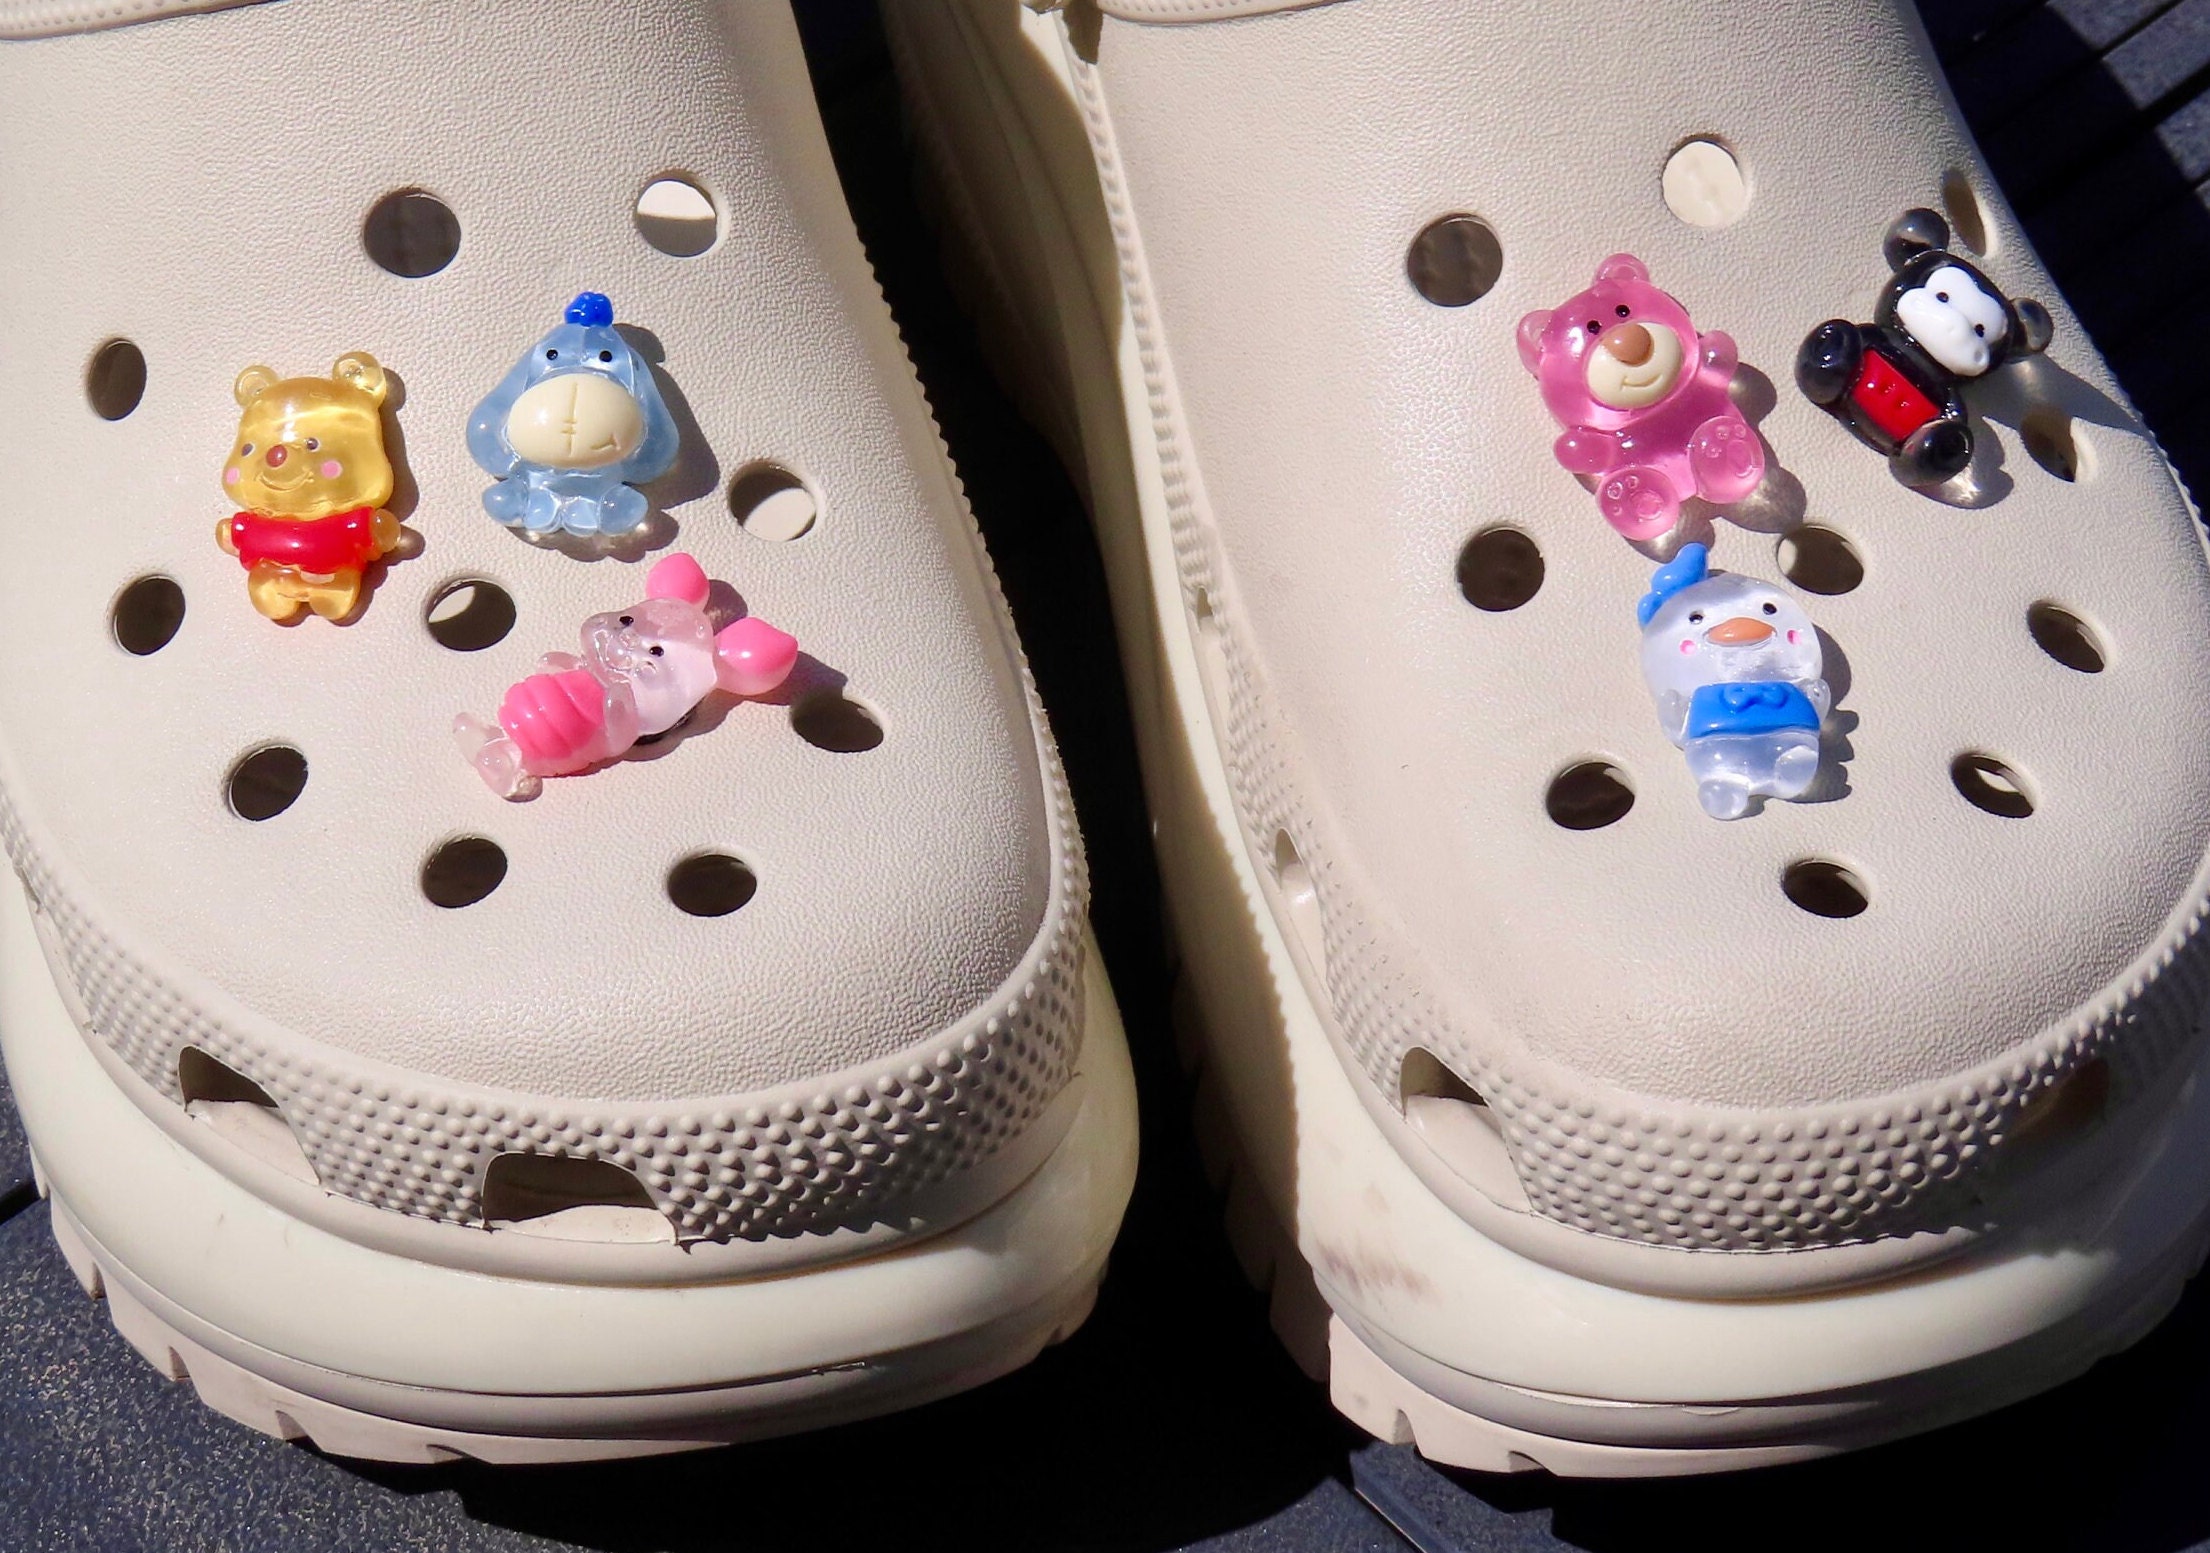 2 Winnie The Pooh Face Shoe Charms For Crocs & Jibbitz Wristbands:  : Fashion